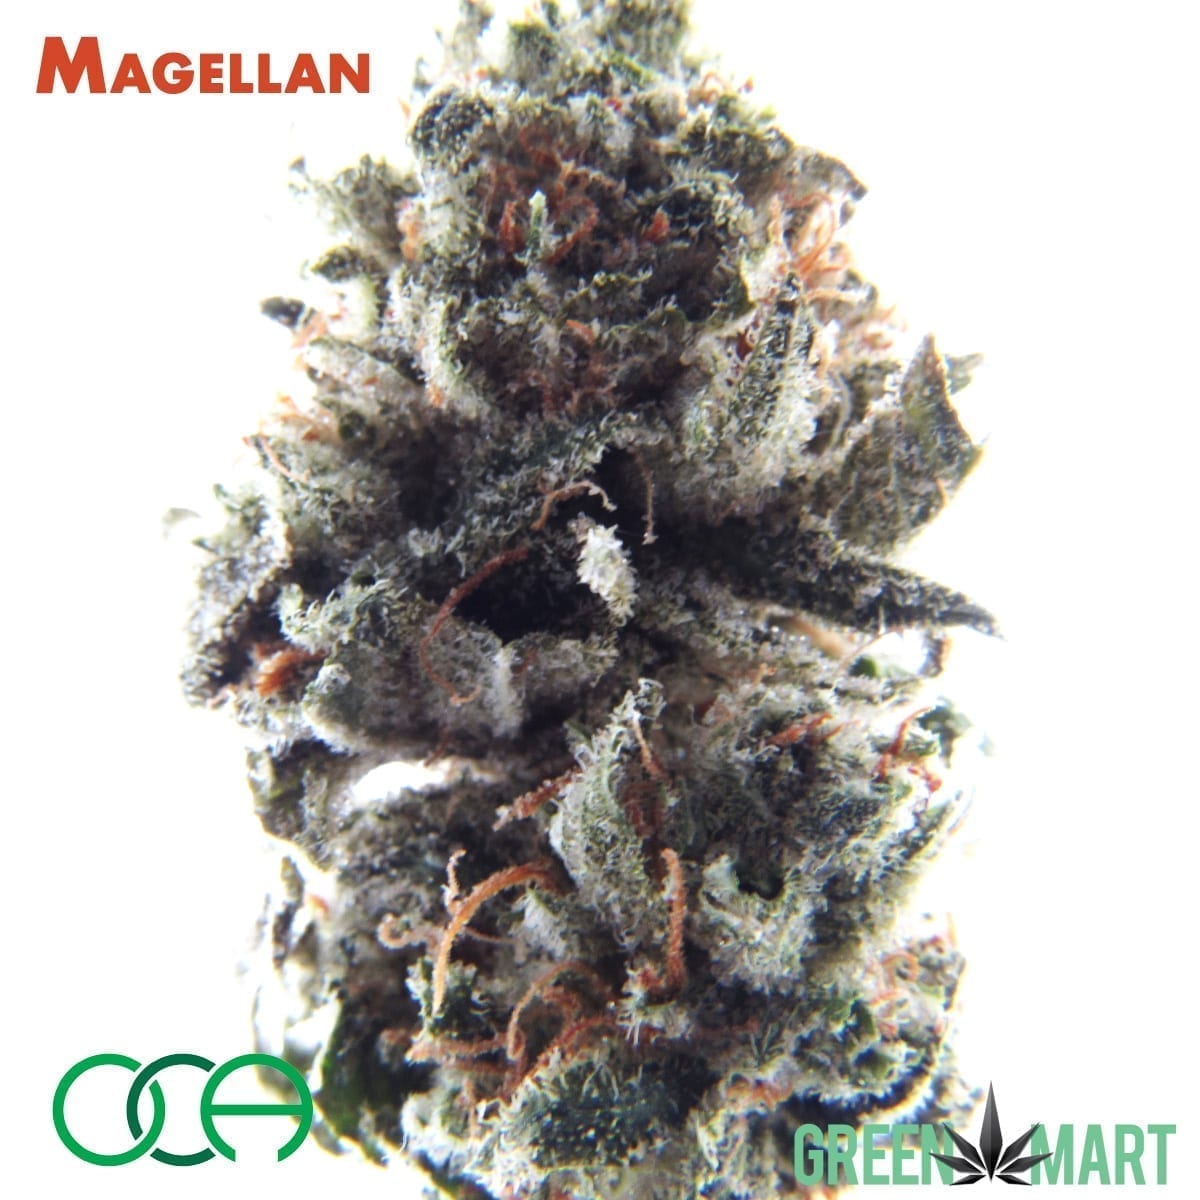 Magellan by Oregon Cannabis Authority